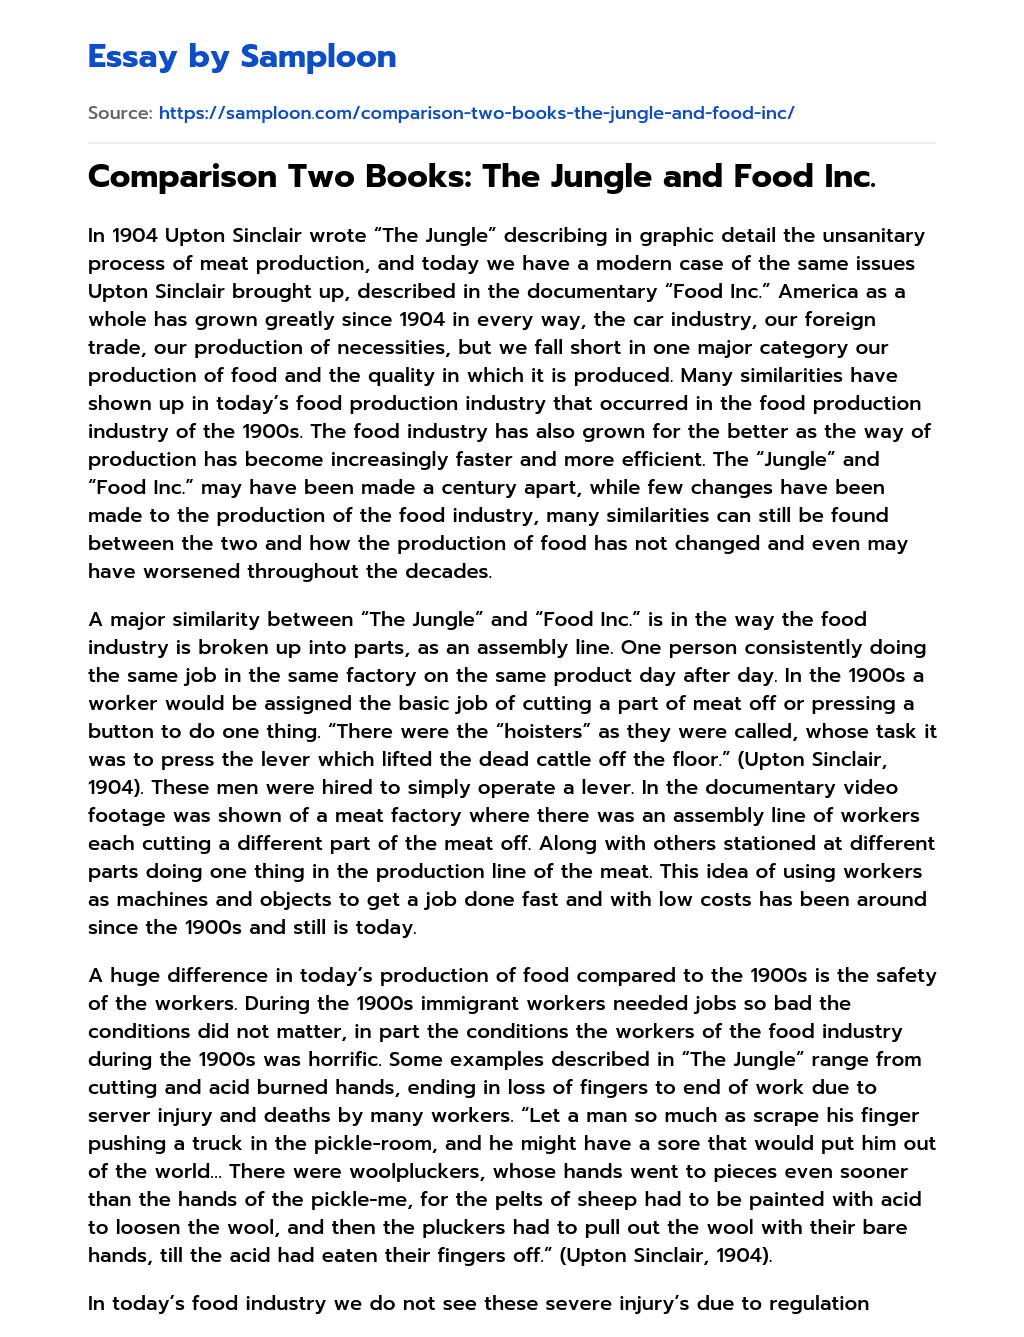 Comparison Two Books: The Jungle and Food Inc. essay